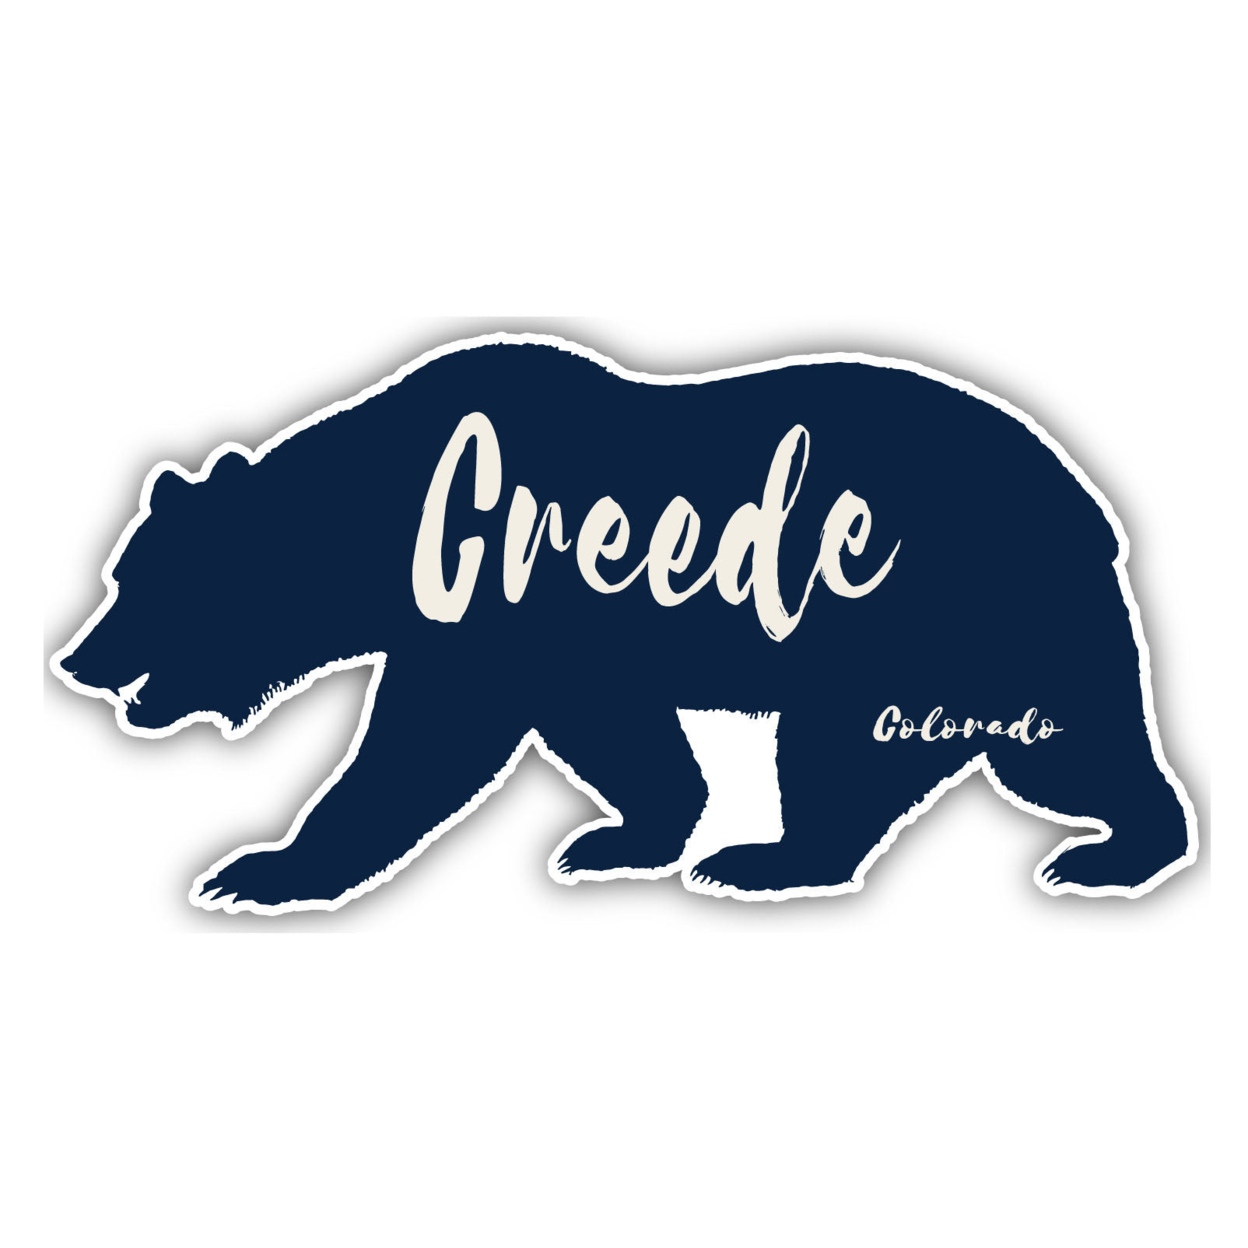 Creede Colorado Souvenir Decorative Stickers (Choose Theme And Size) - Single Unit, 6-Inch, Tent